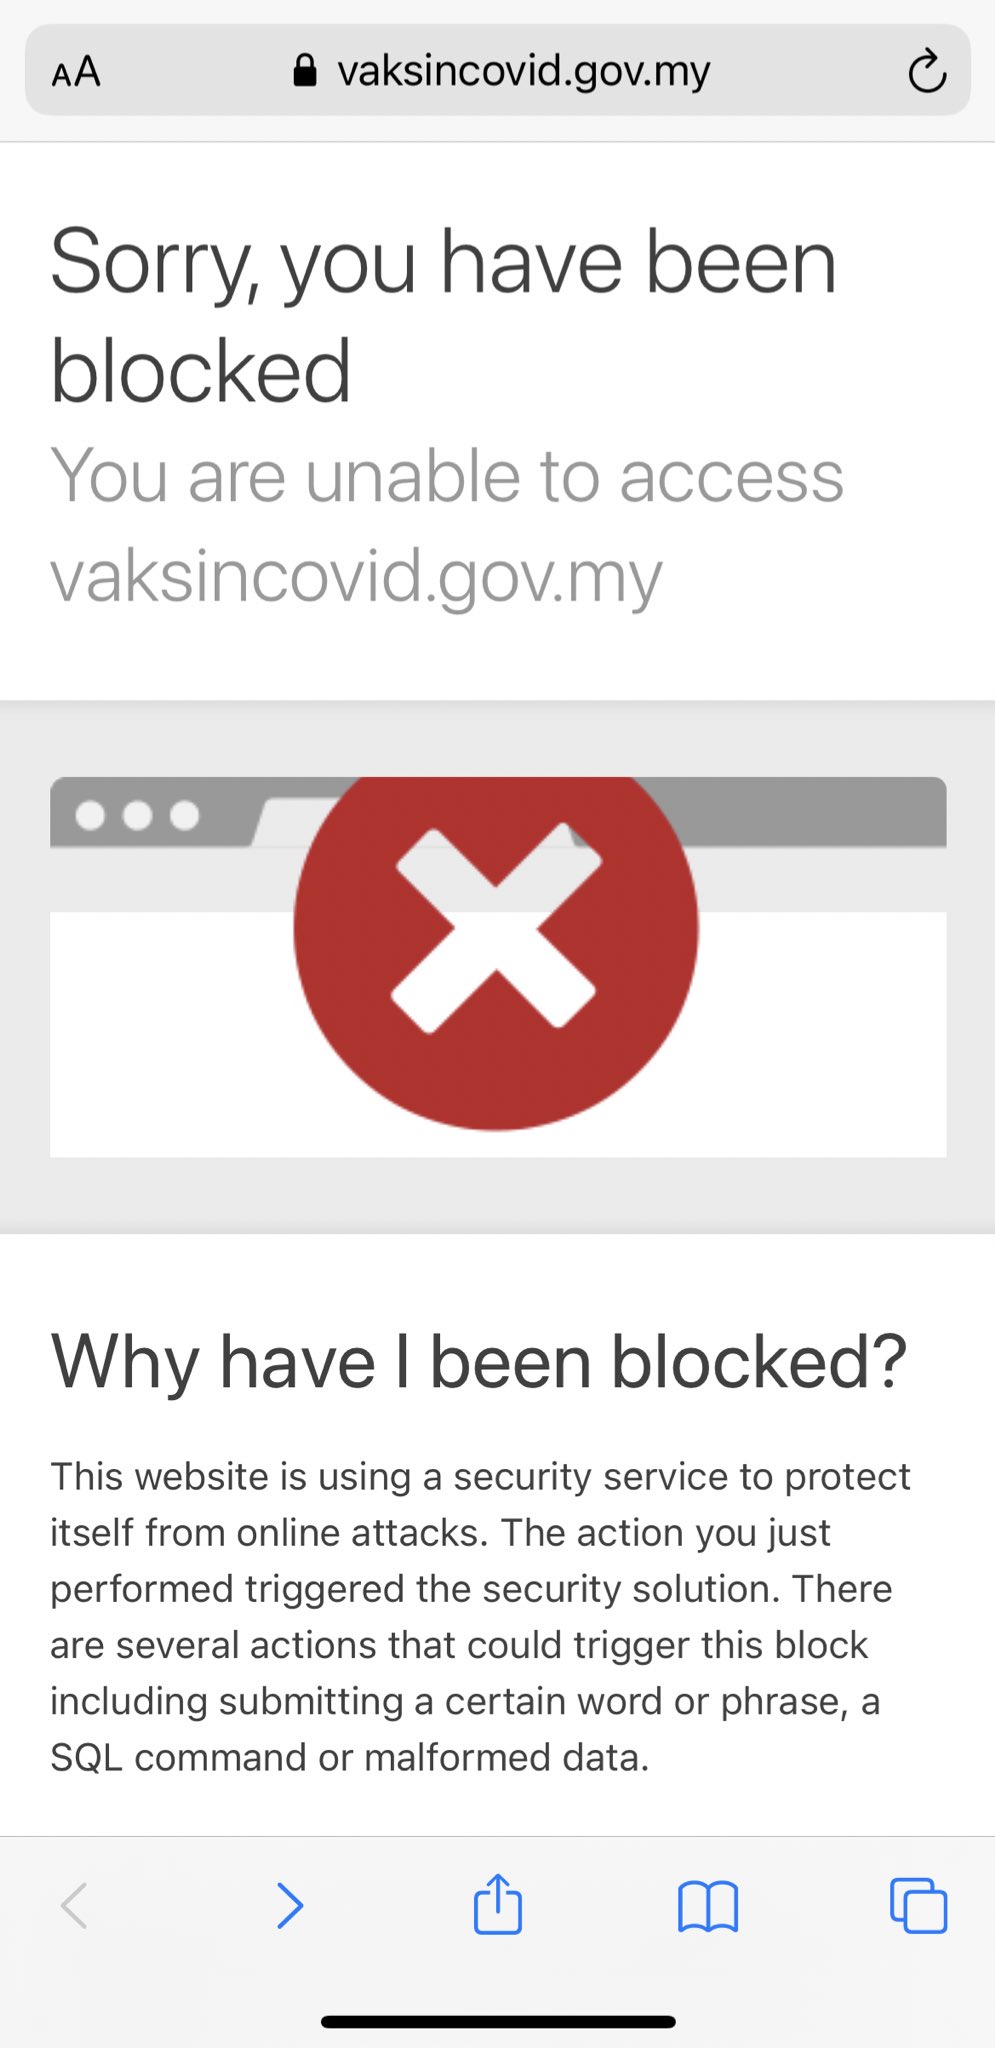 Vaksincovid.gov.my website